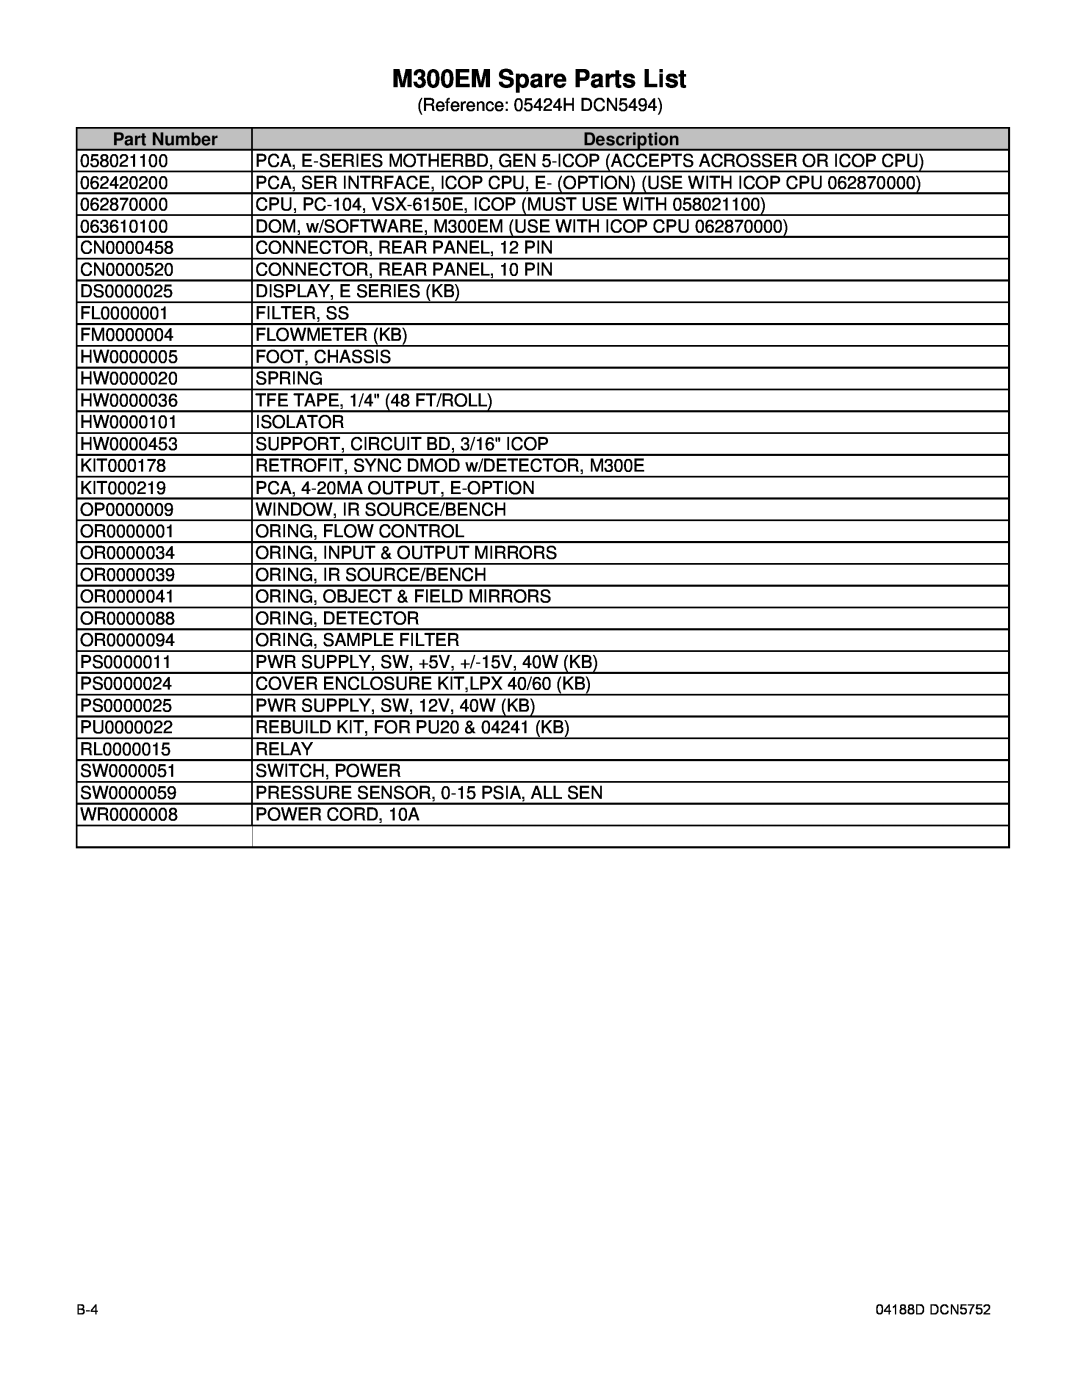 Teledyne operation manual M300EM Spare Parts List, Reference: 05424H DCN5494, Part Number, Description 